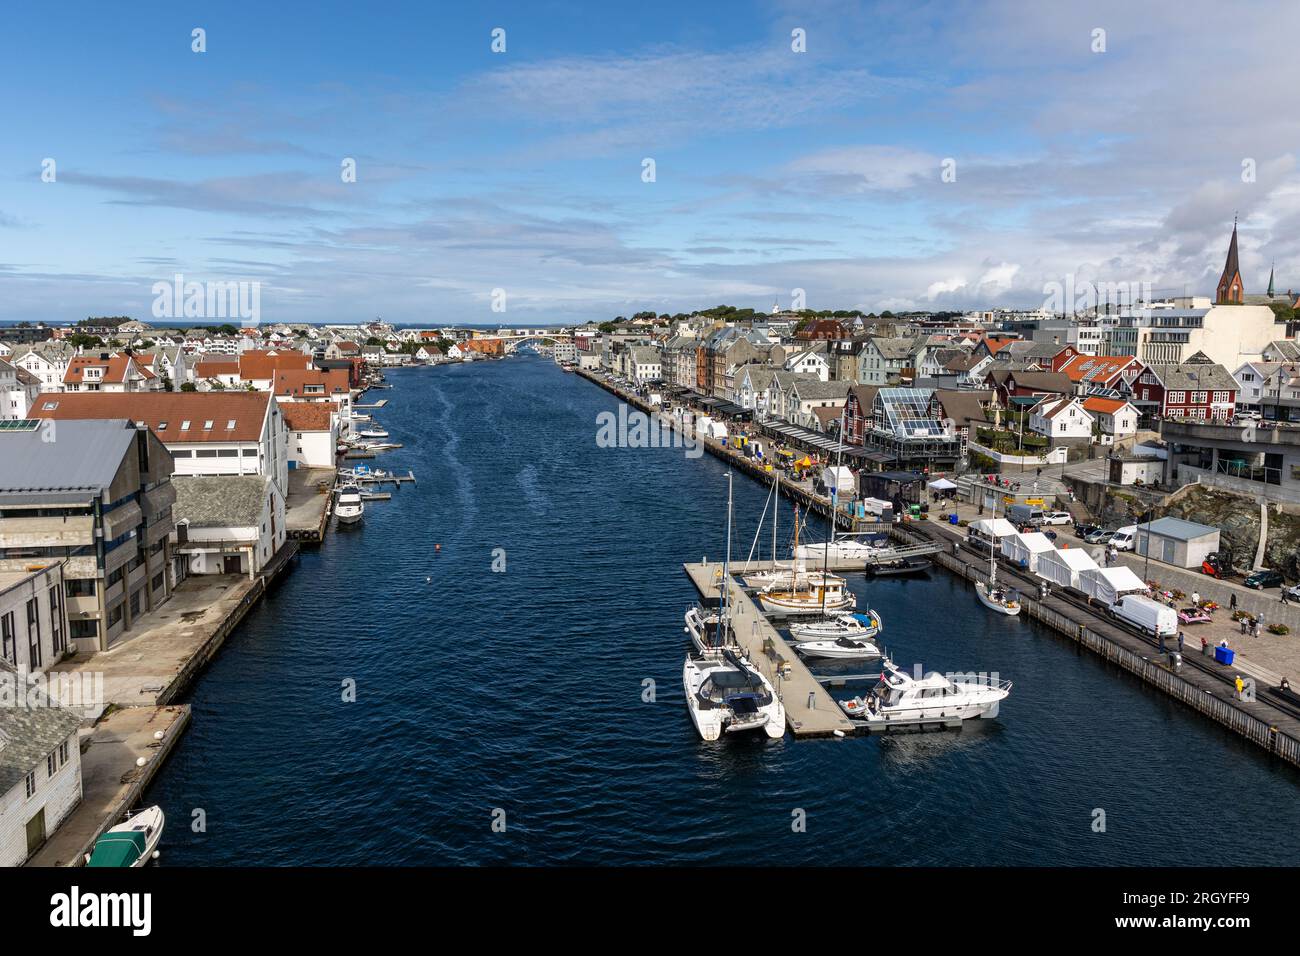 Smedasundet guest harbor (gjestehavn) of Haugesund city in Norway. Haugesund is a town in Rogaland region established in 1855. Stock Photo